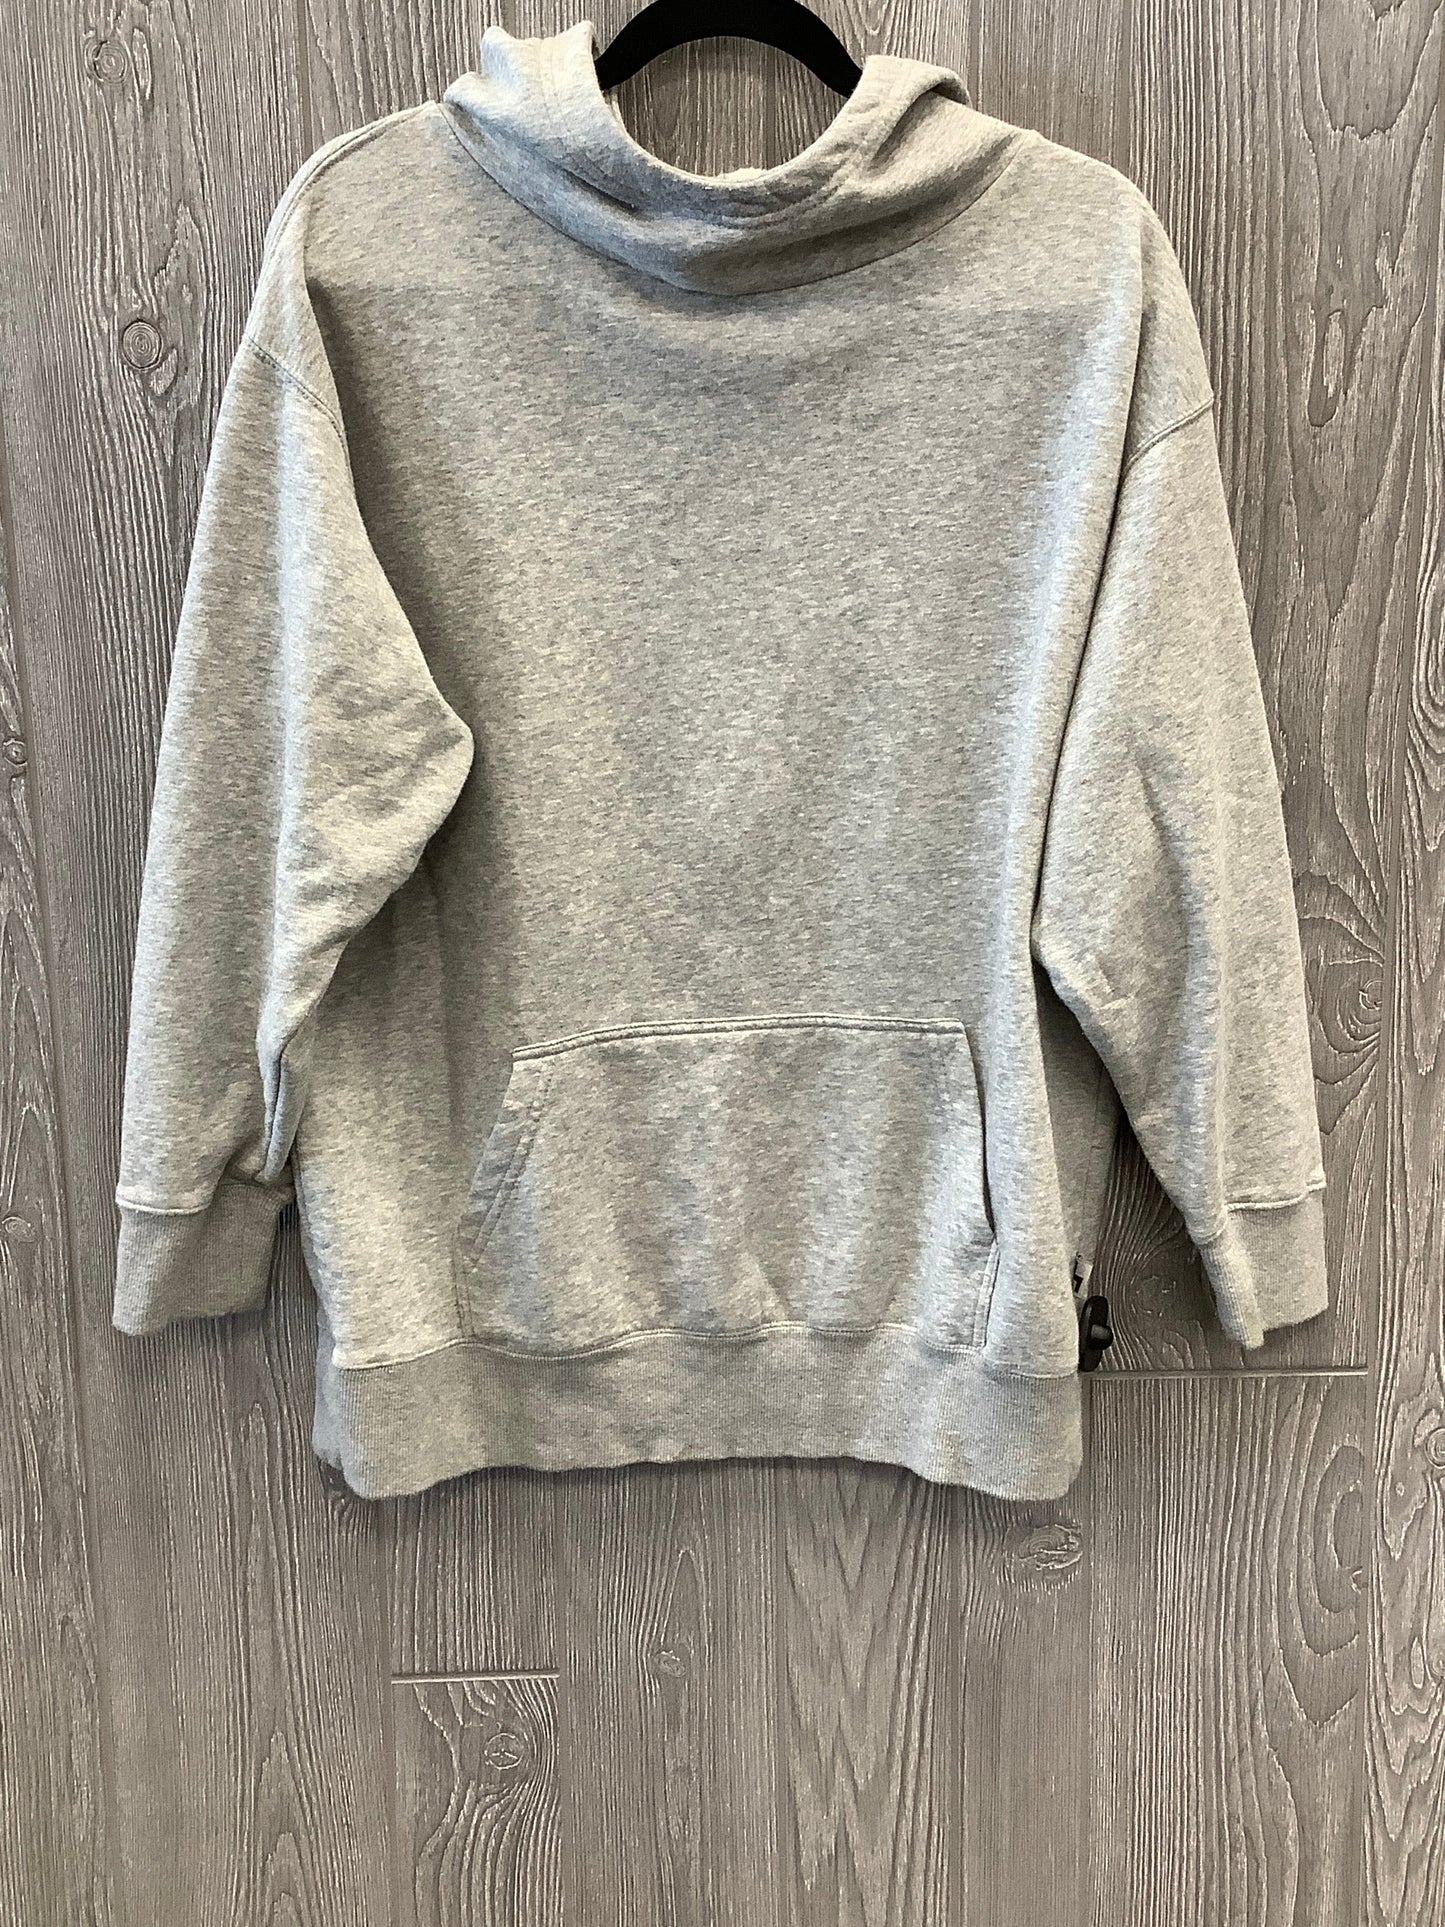 Sweatshirt Hoodie By Joy Lab  Size: S